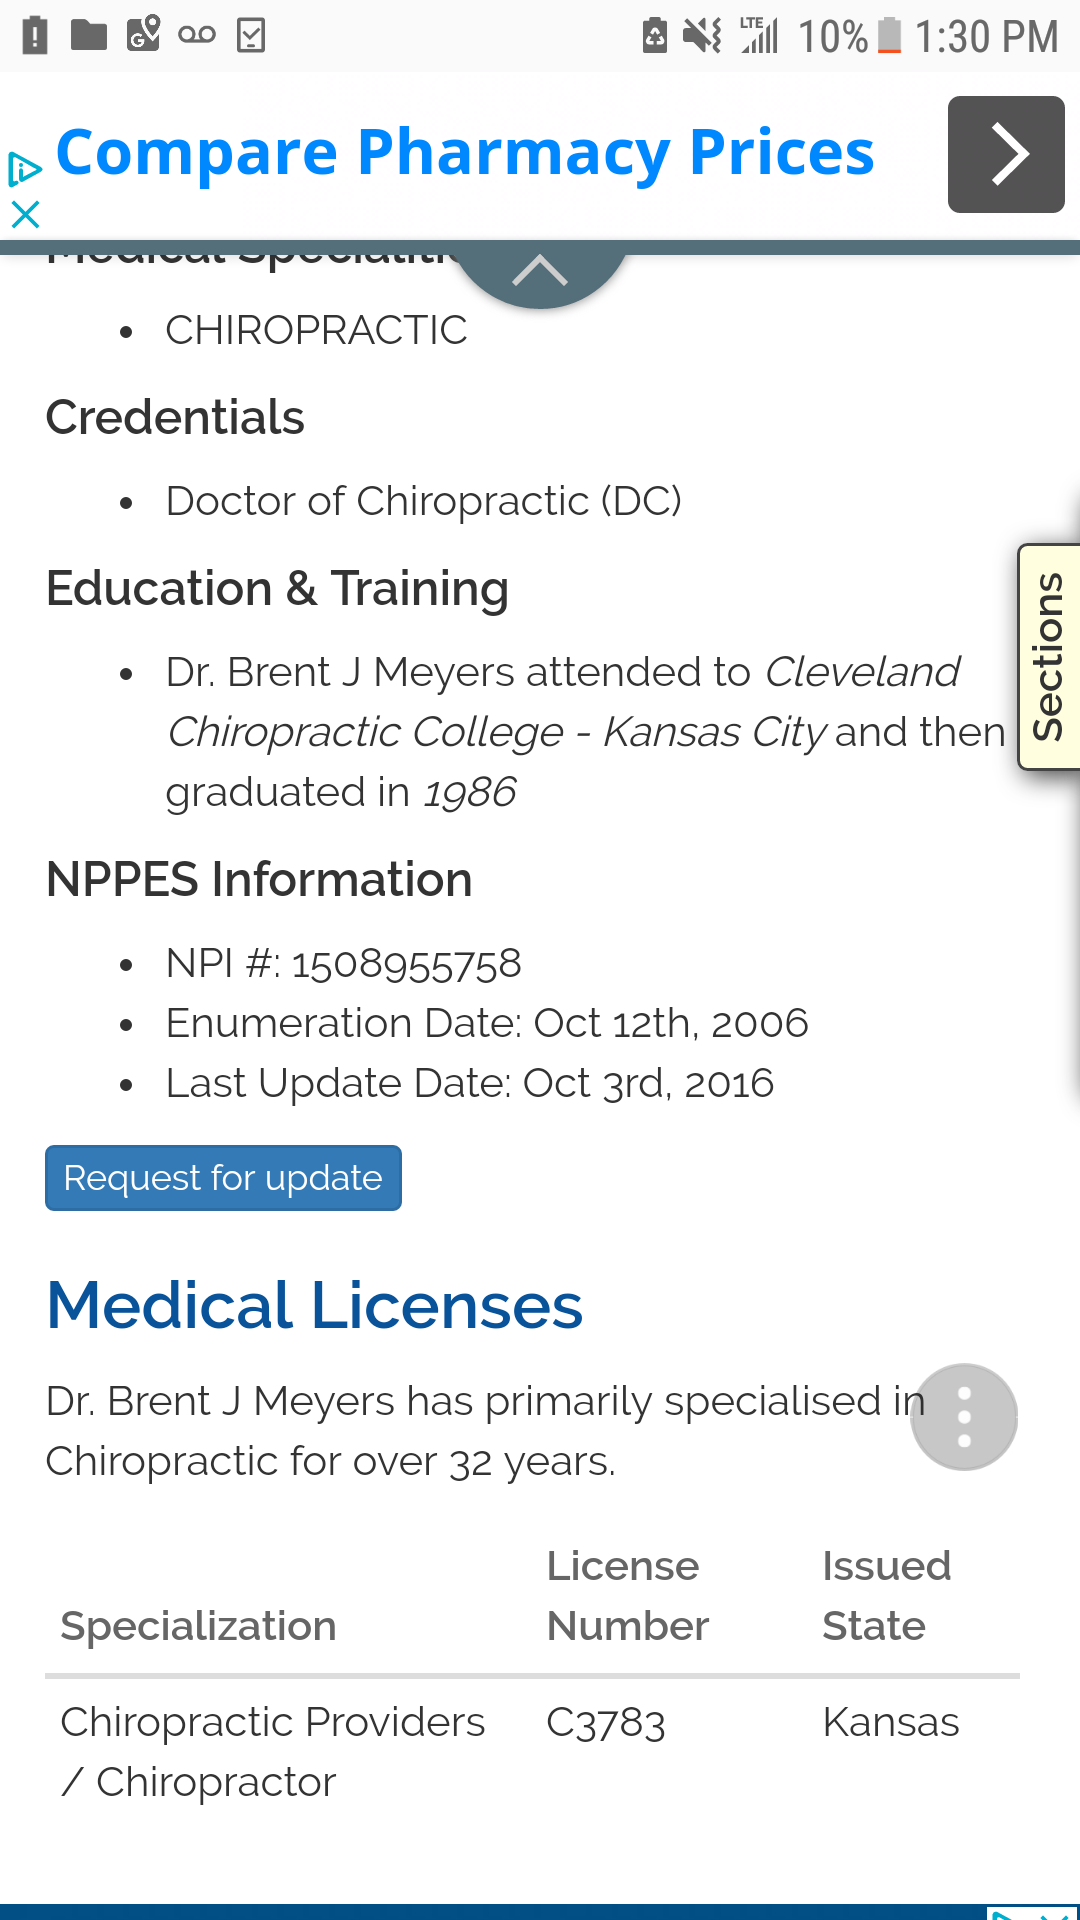 Dr. Brent J. Meyers Chiropractor